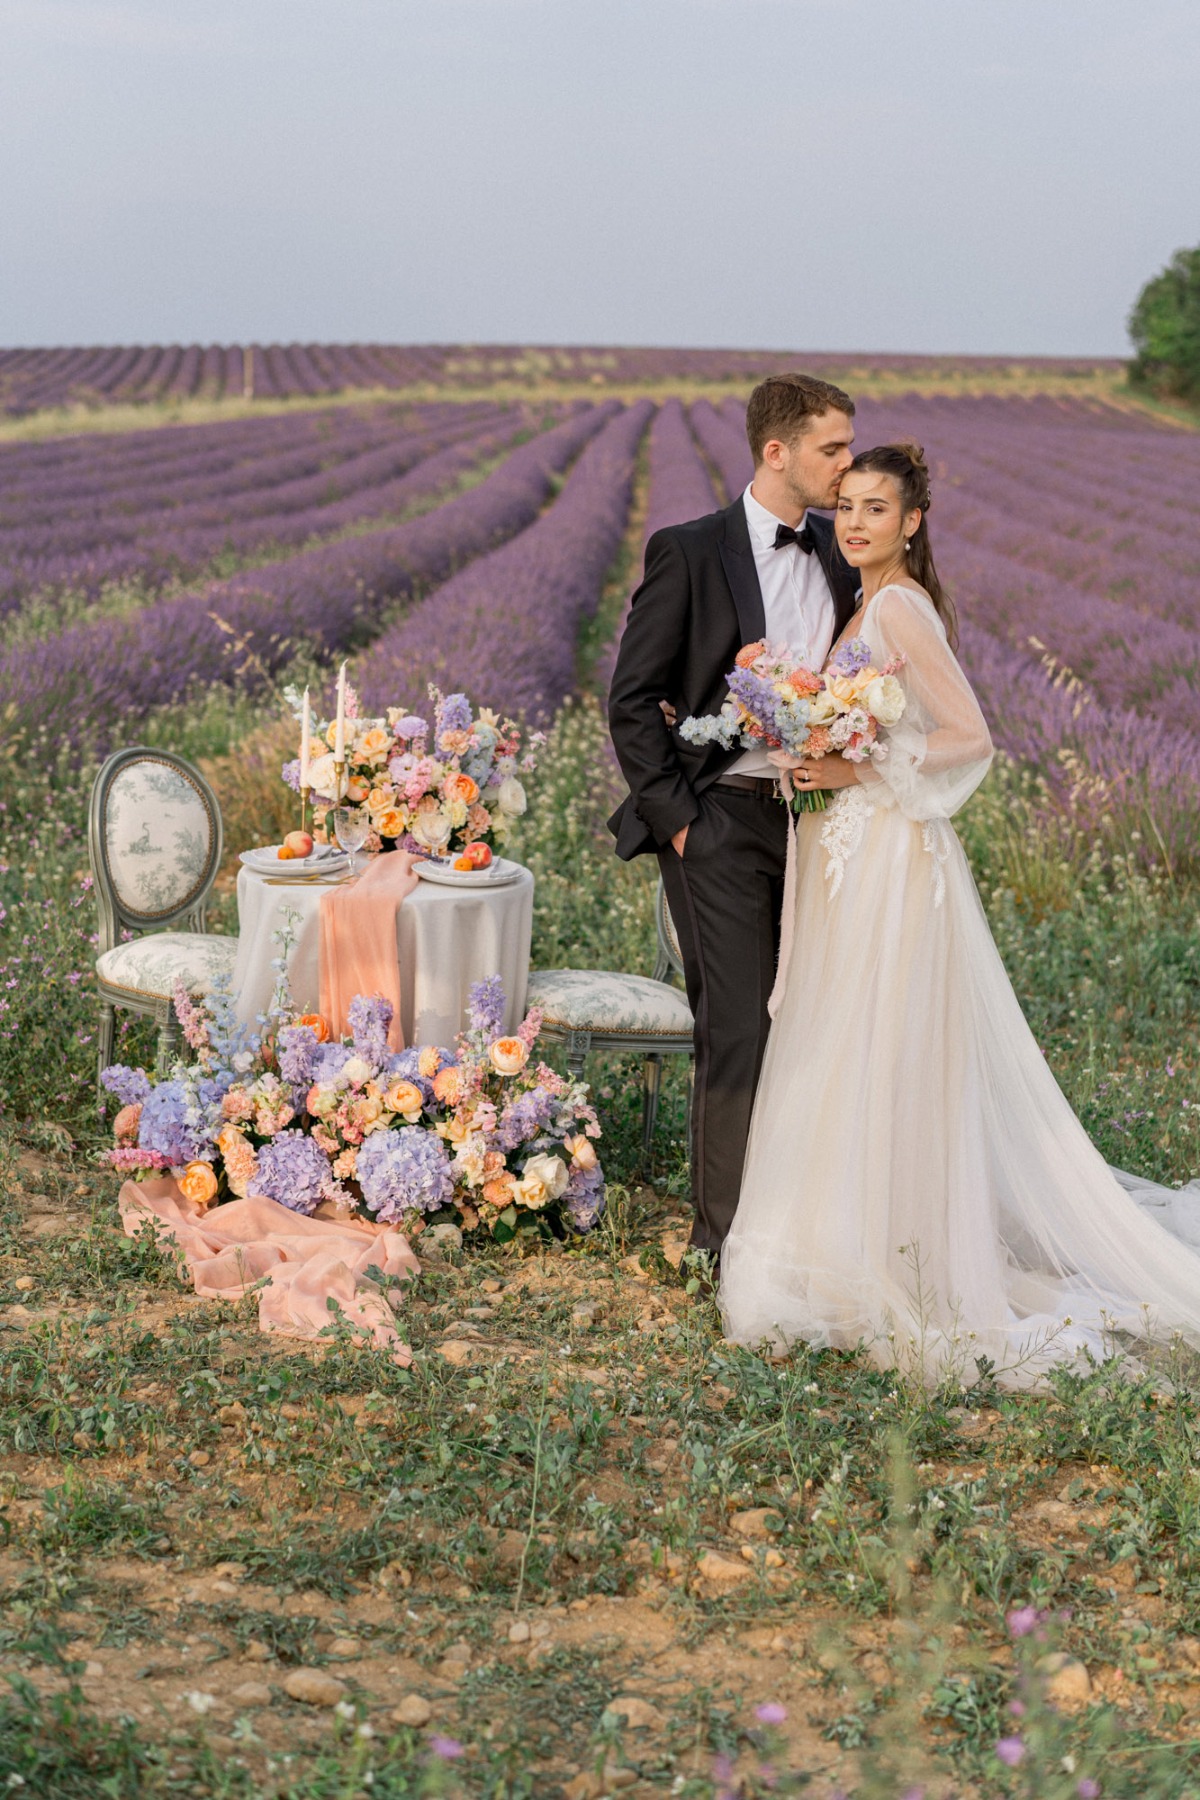 Romantic elopement in lavender field